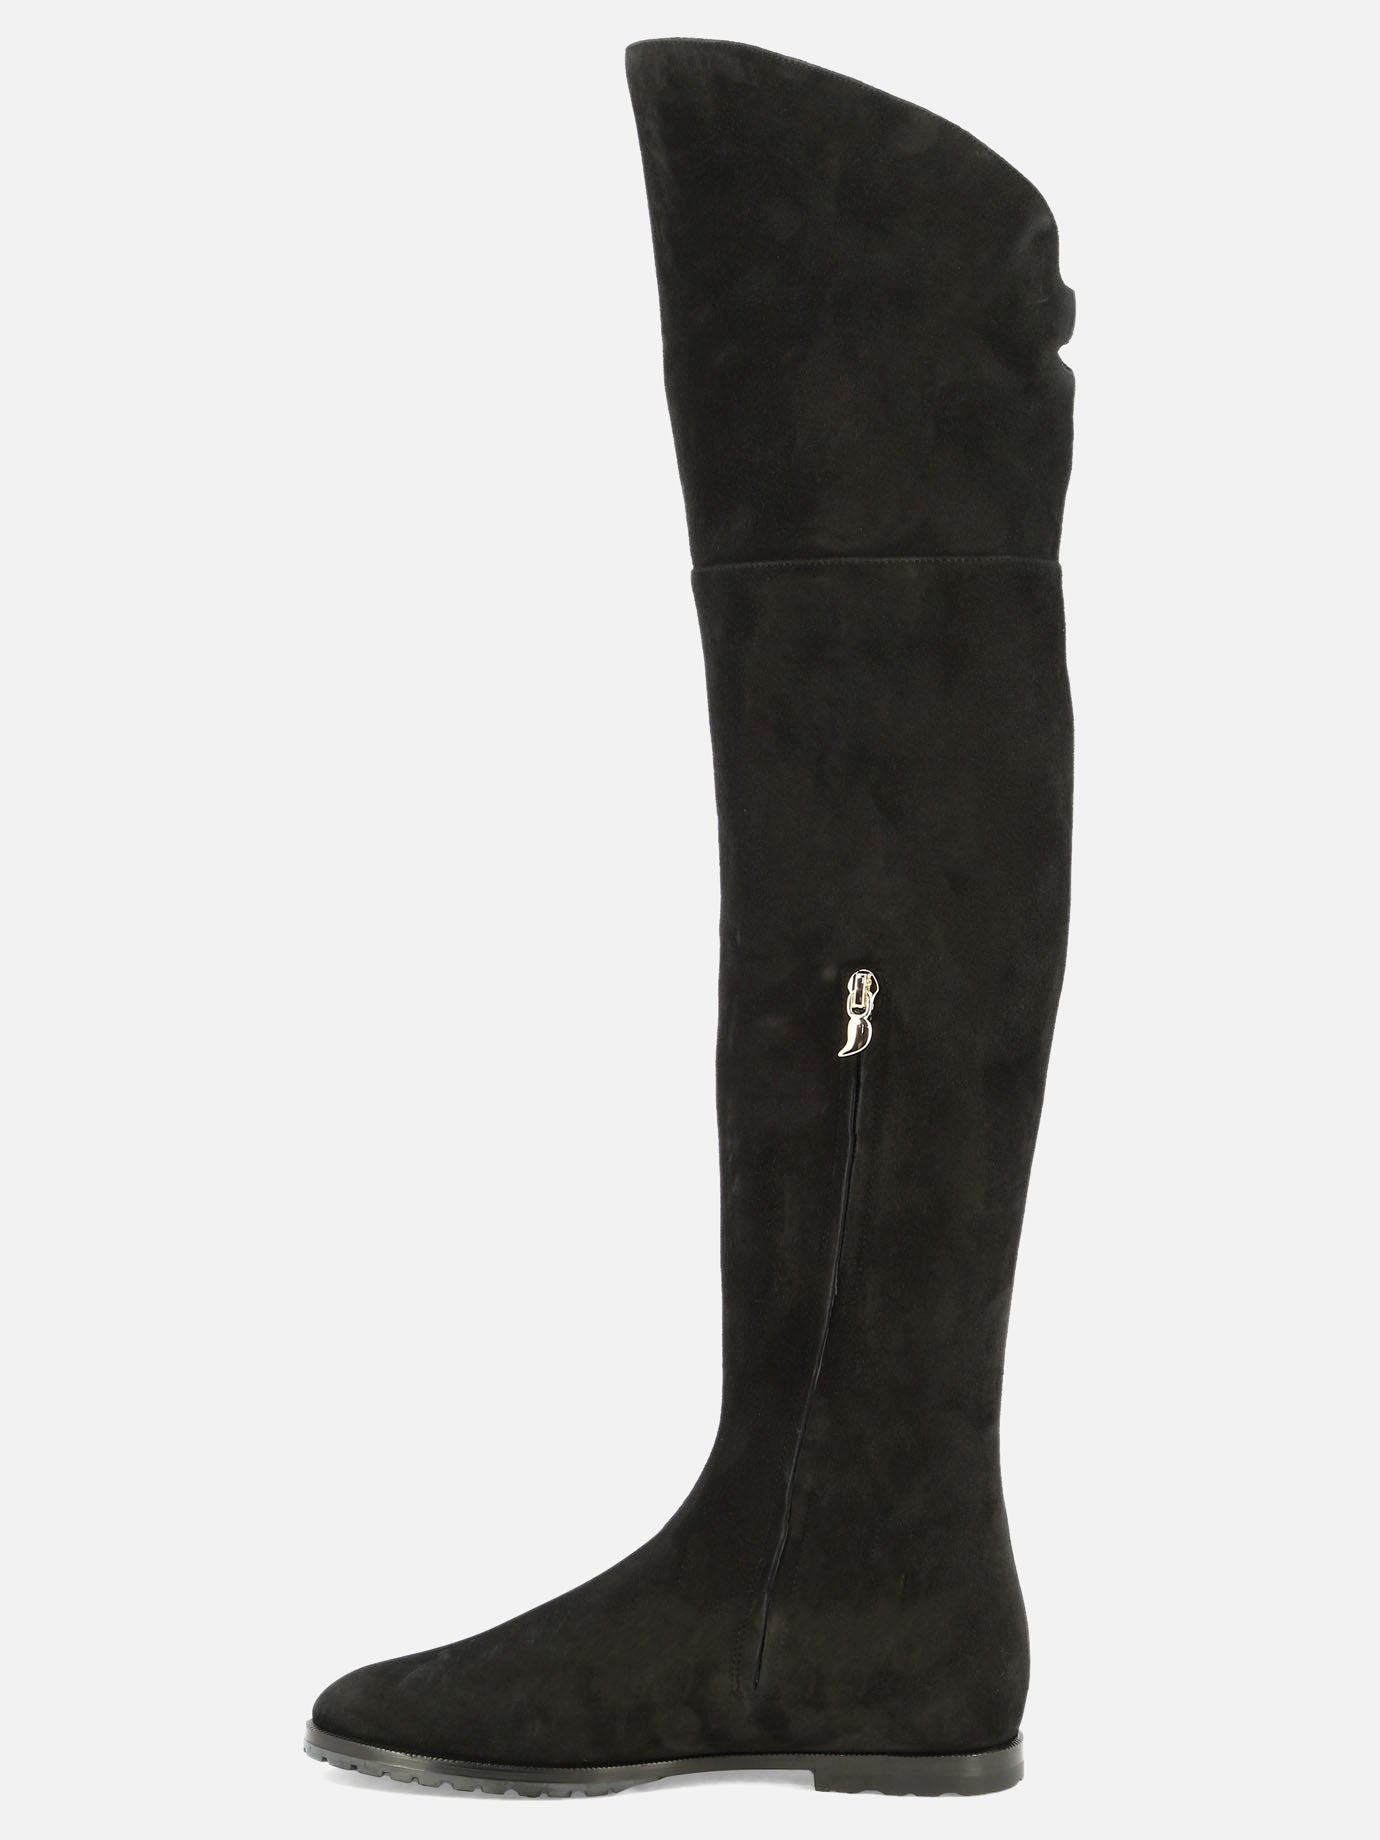 "Stefania" boots